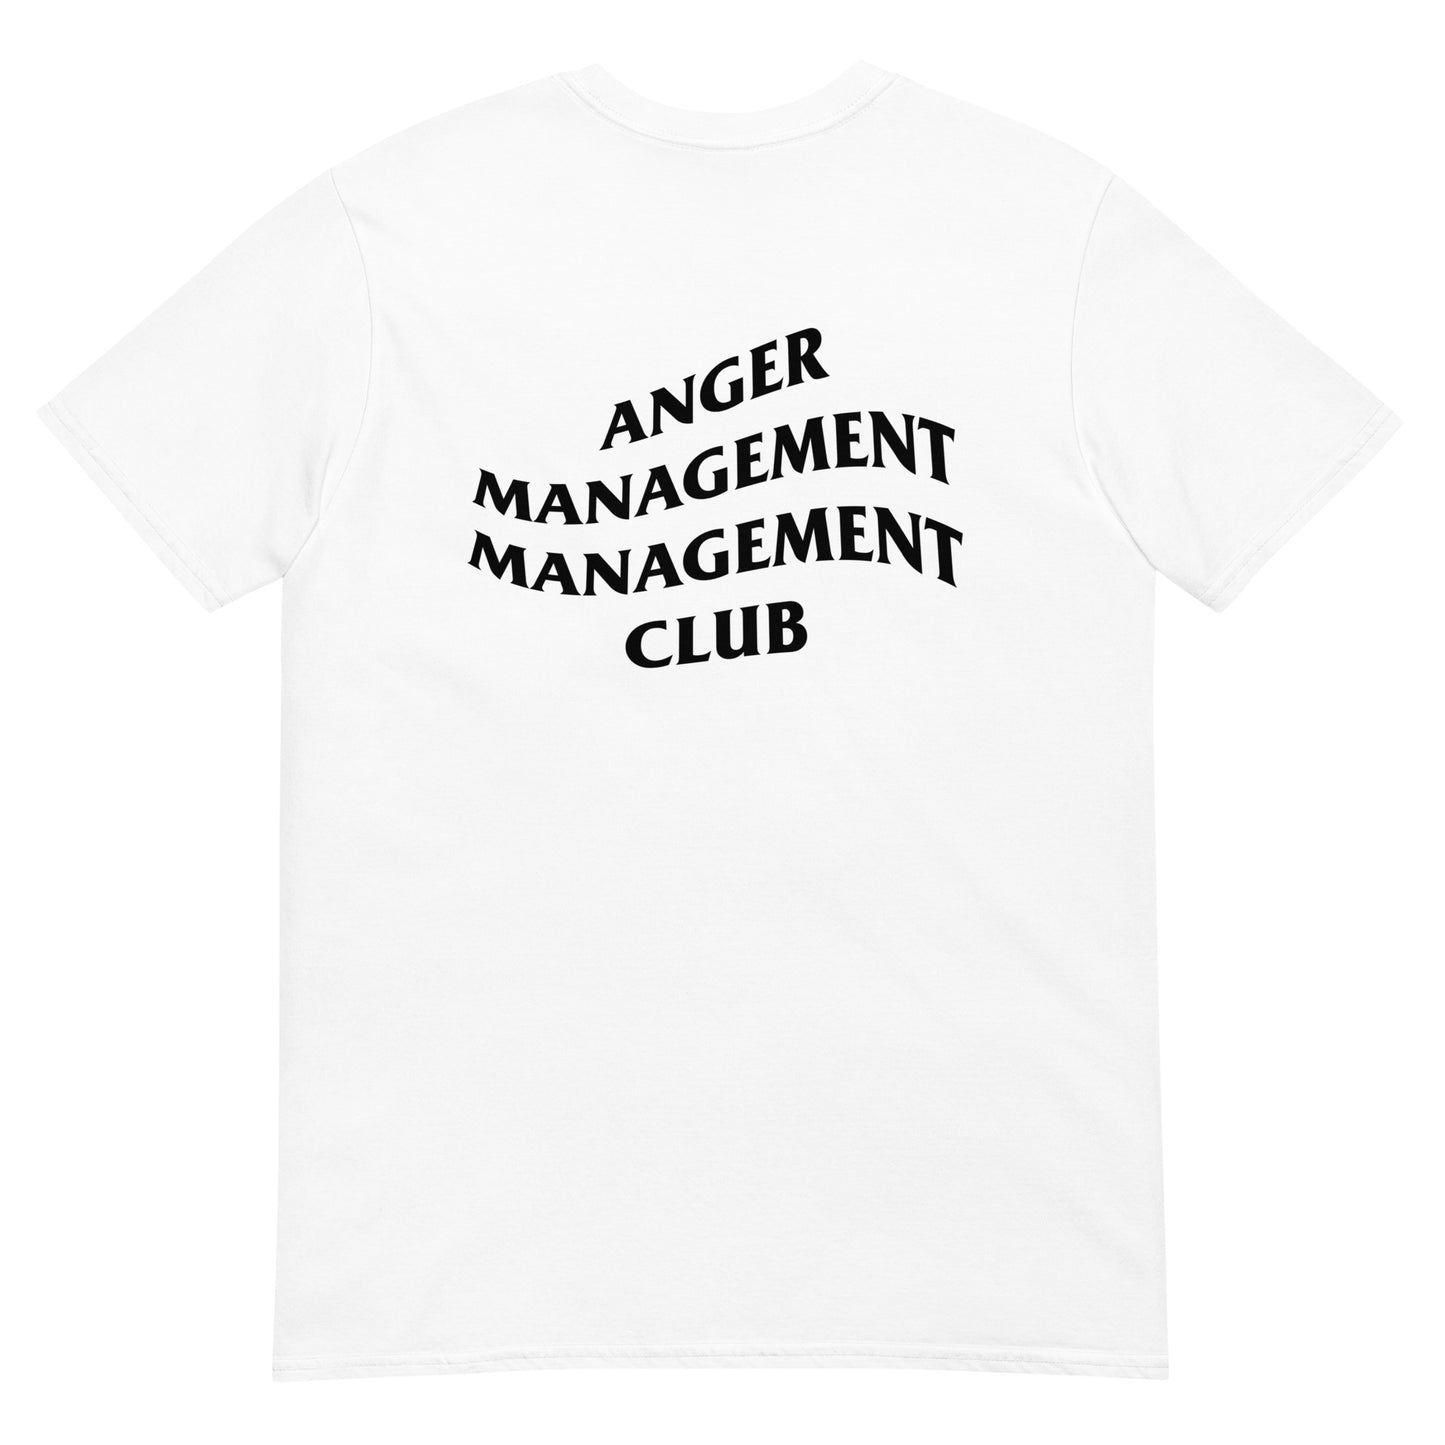 ANGER MANAGEMENT MANAGEMENT CLUB